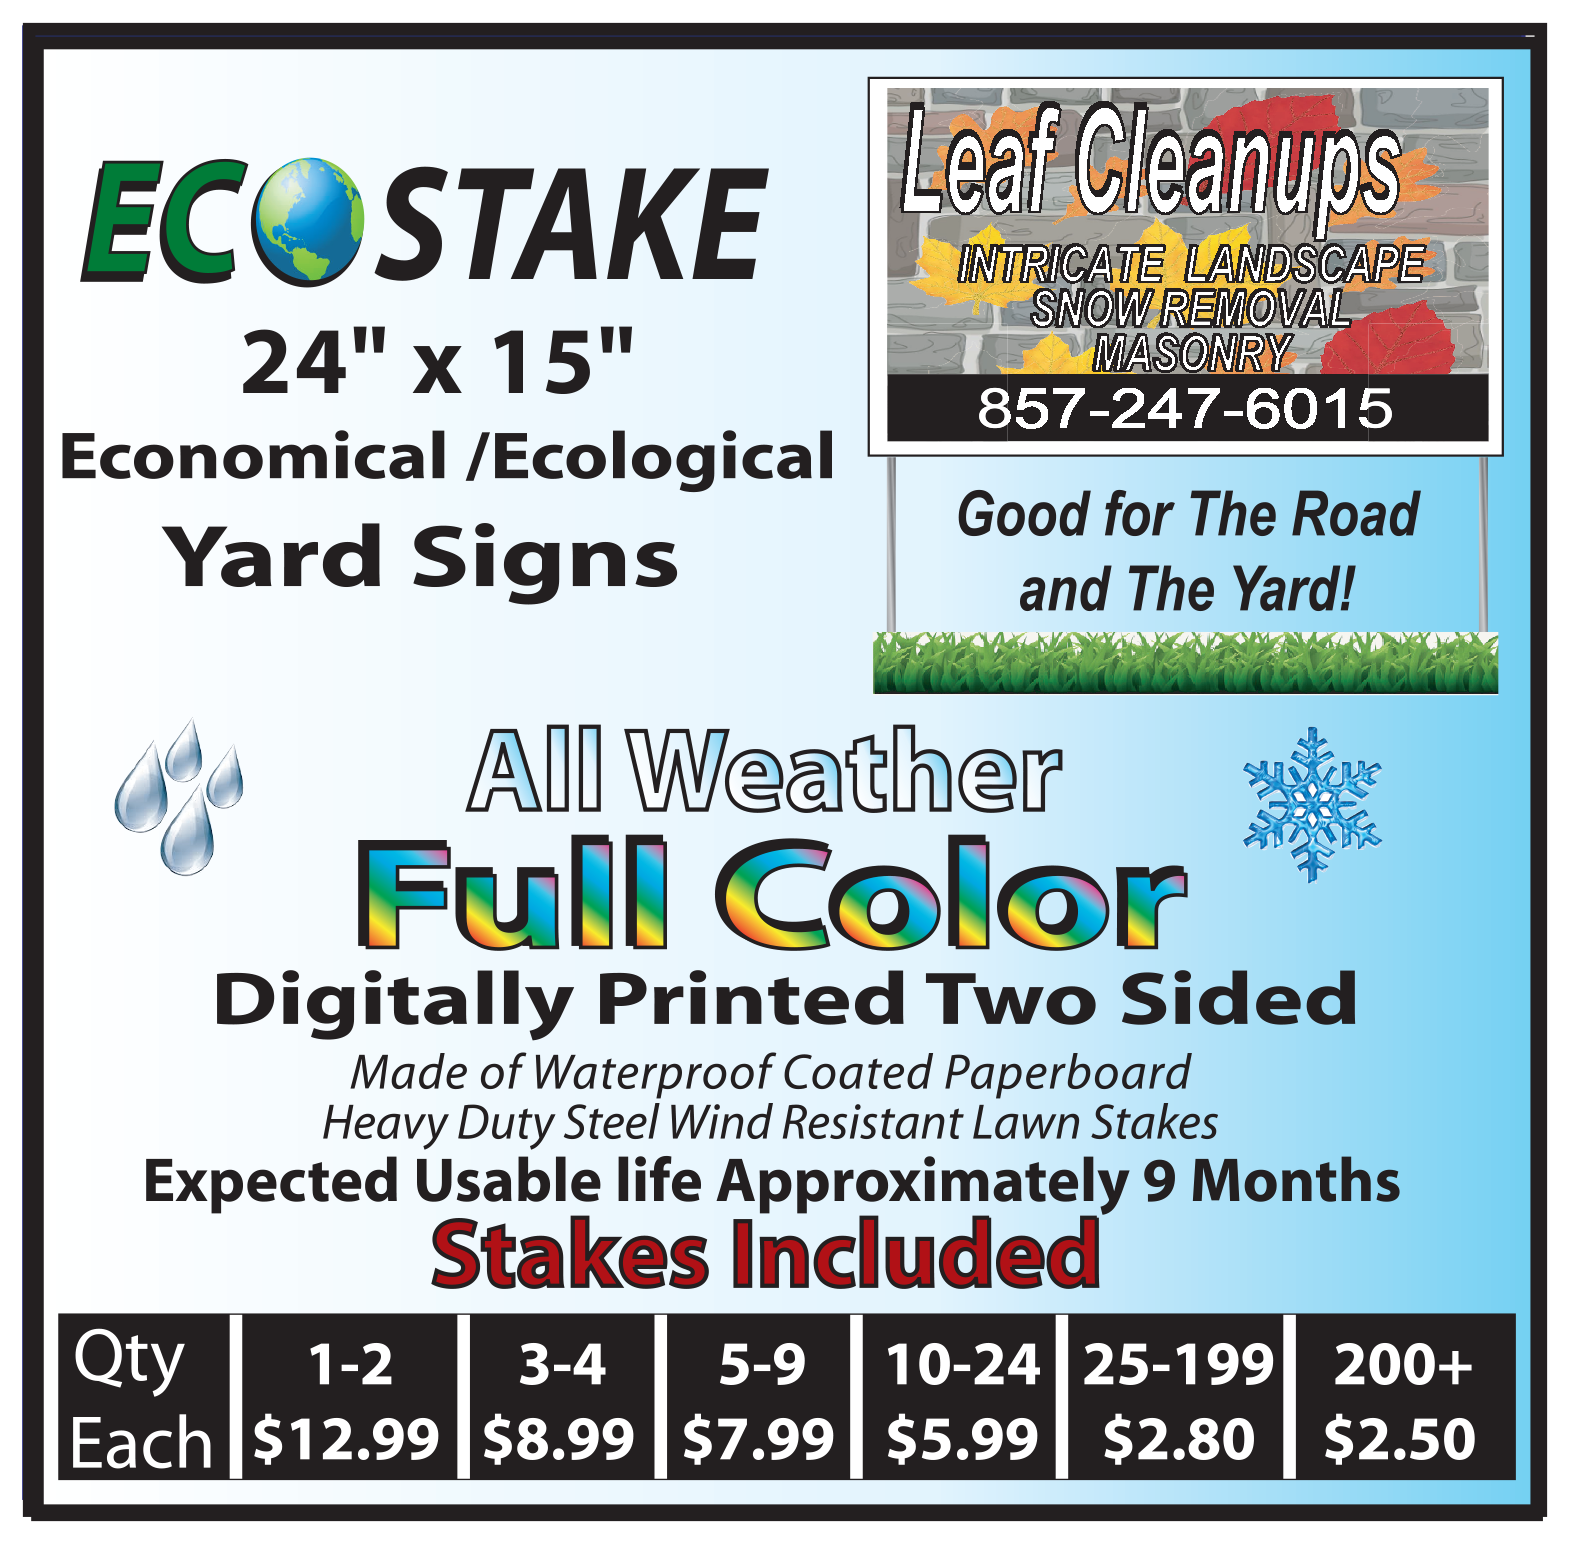 Leaf Cleanups 24" x 15" Ecostake Yard sign